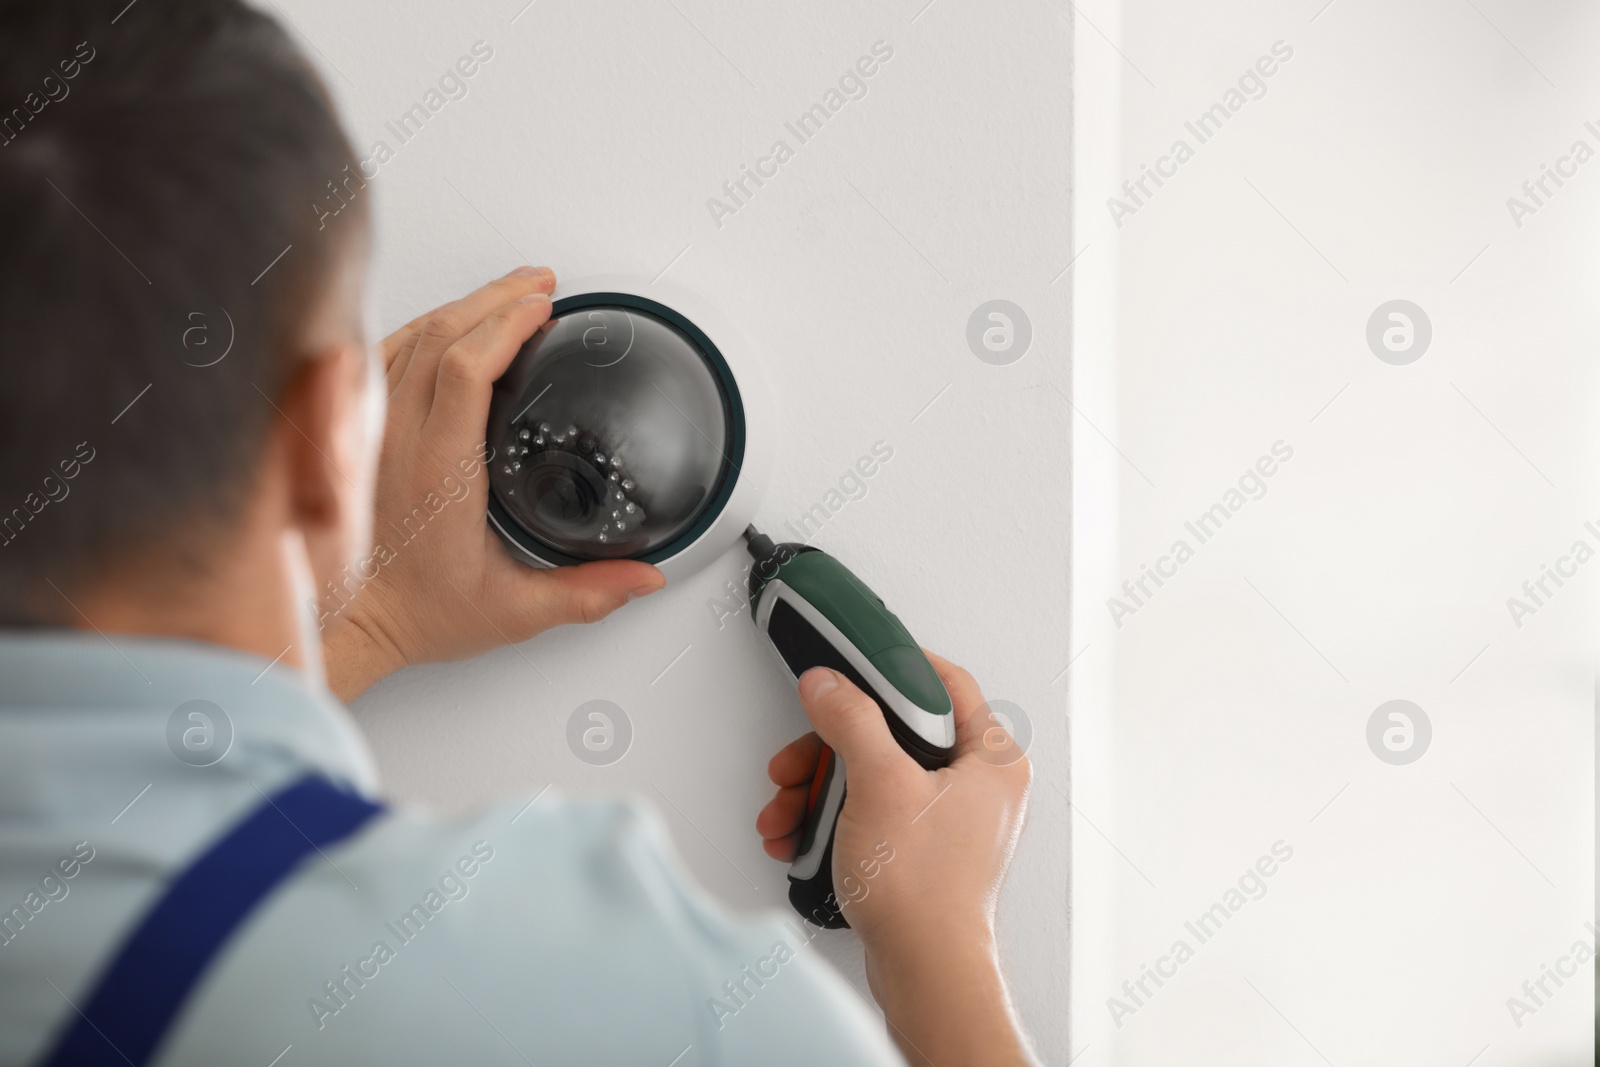 Photo of Technician installing CCTV camera on wall indoors, closeup